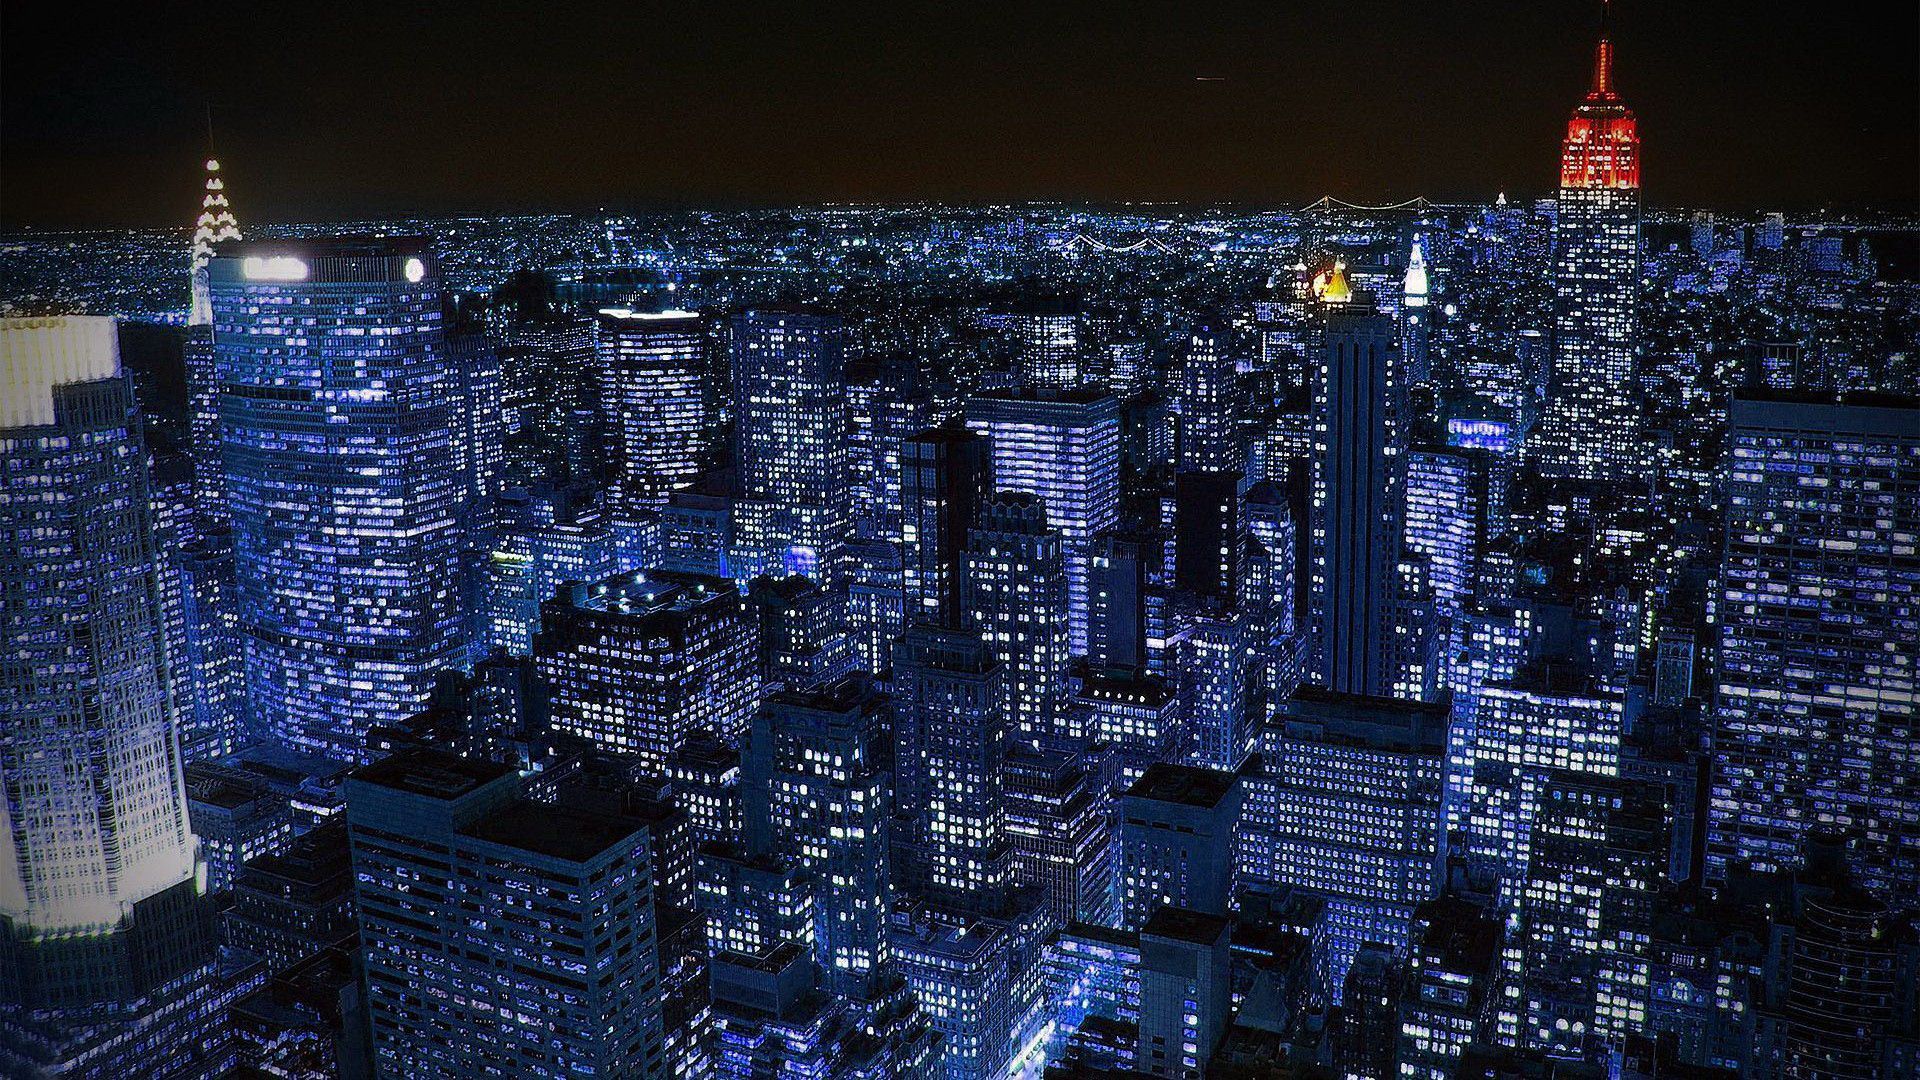 New York City At Night Desktop Wallpaper. City wallpaper, New york city background, Nyc